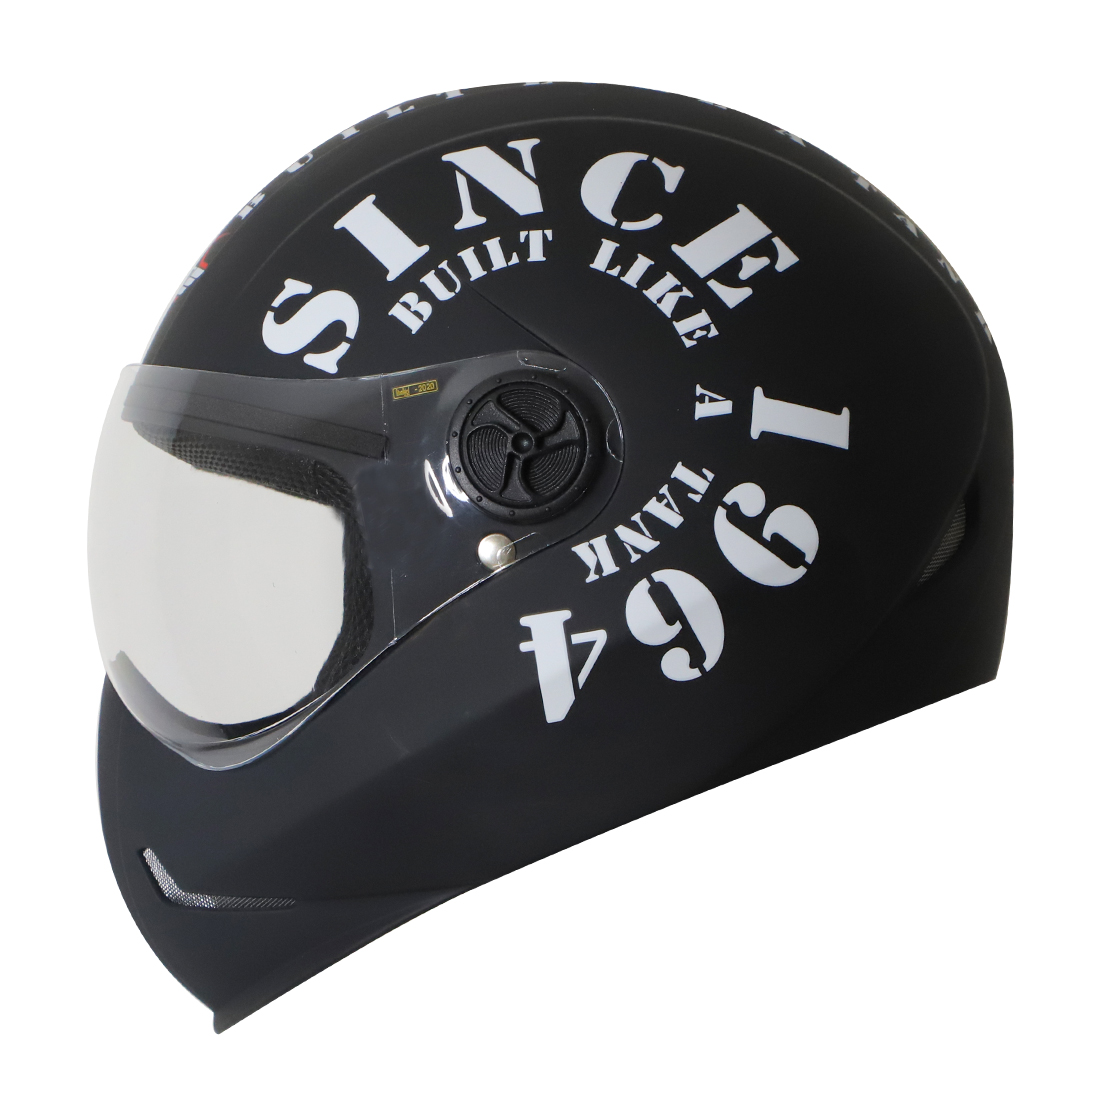 Steelbird SB-50 Adonis Tank Full Face Graphic Helmet Motorbike Helmet (Matt Black White with Clear Visor)